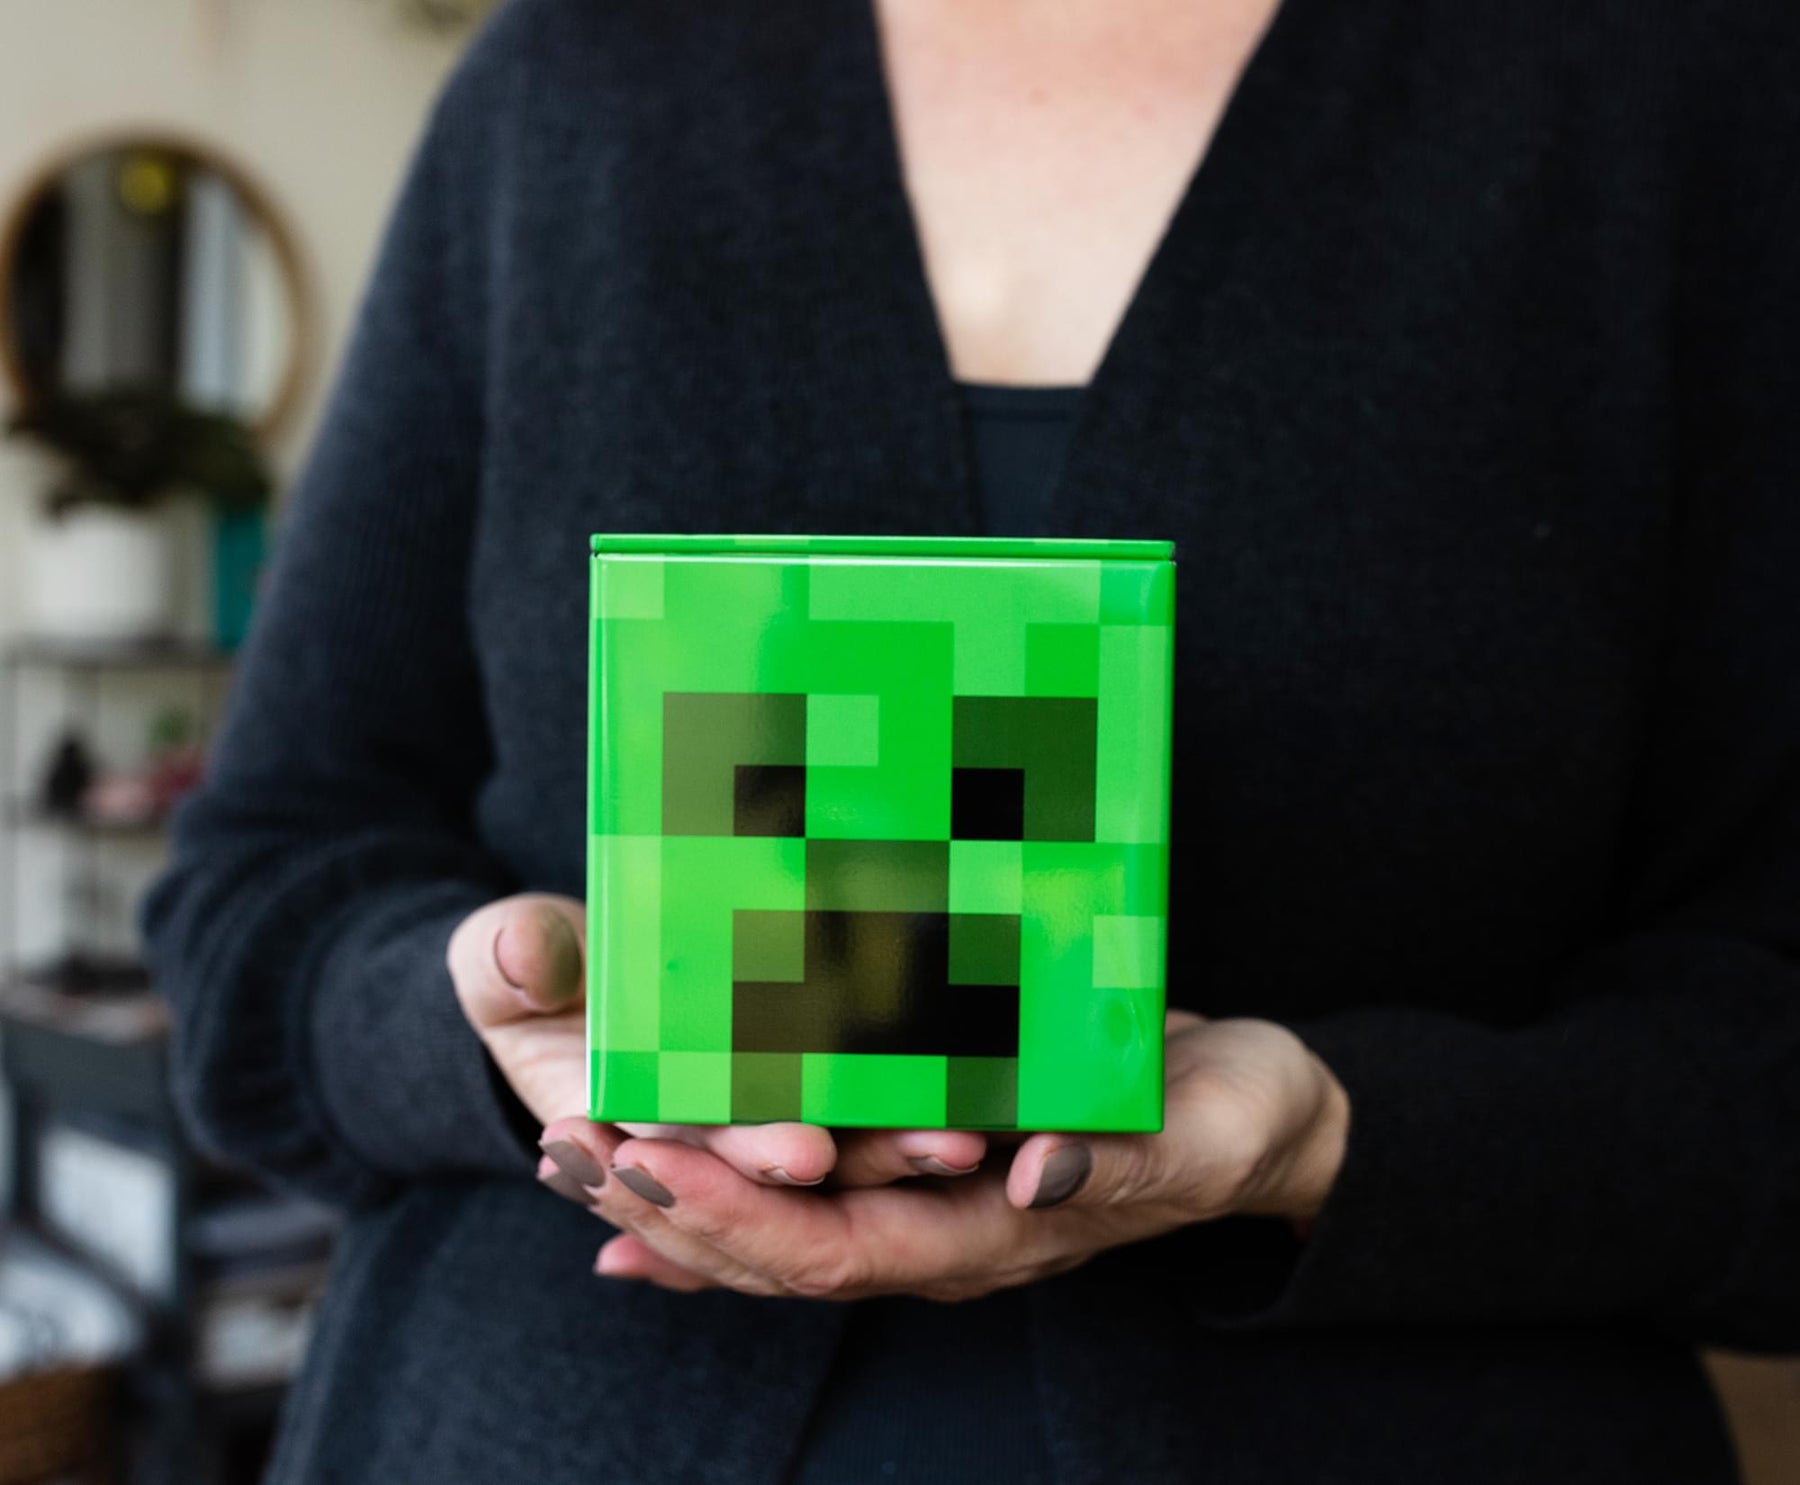 Minecraft 4x4 Inch Tin Storage Box Set of 5 | Bee | Creeper | TNT | Table | Jack